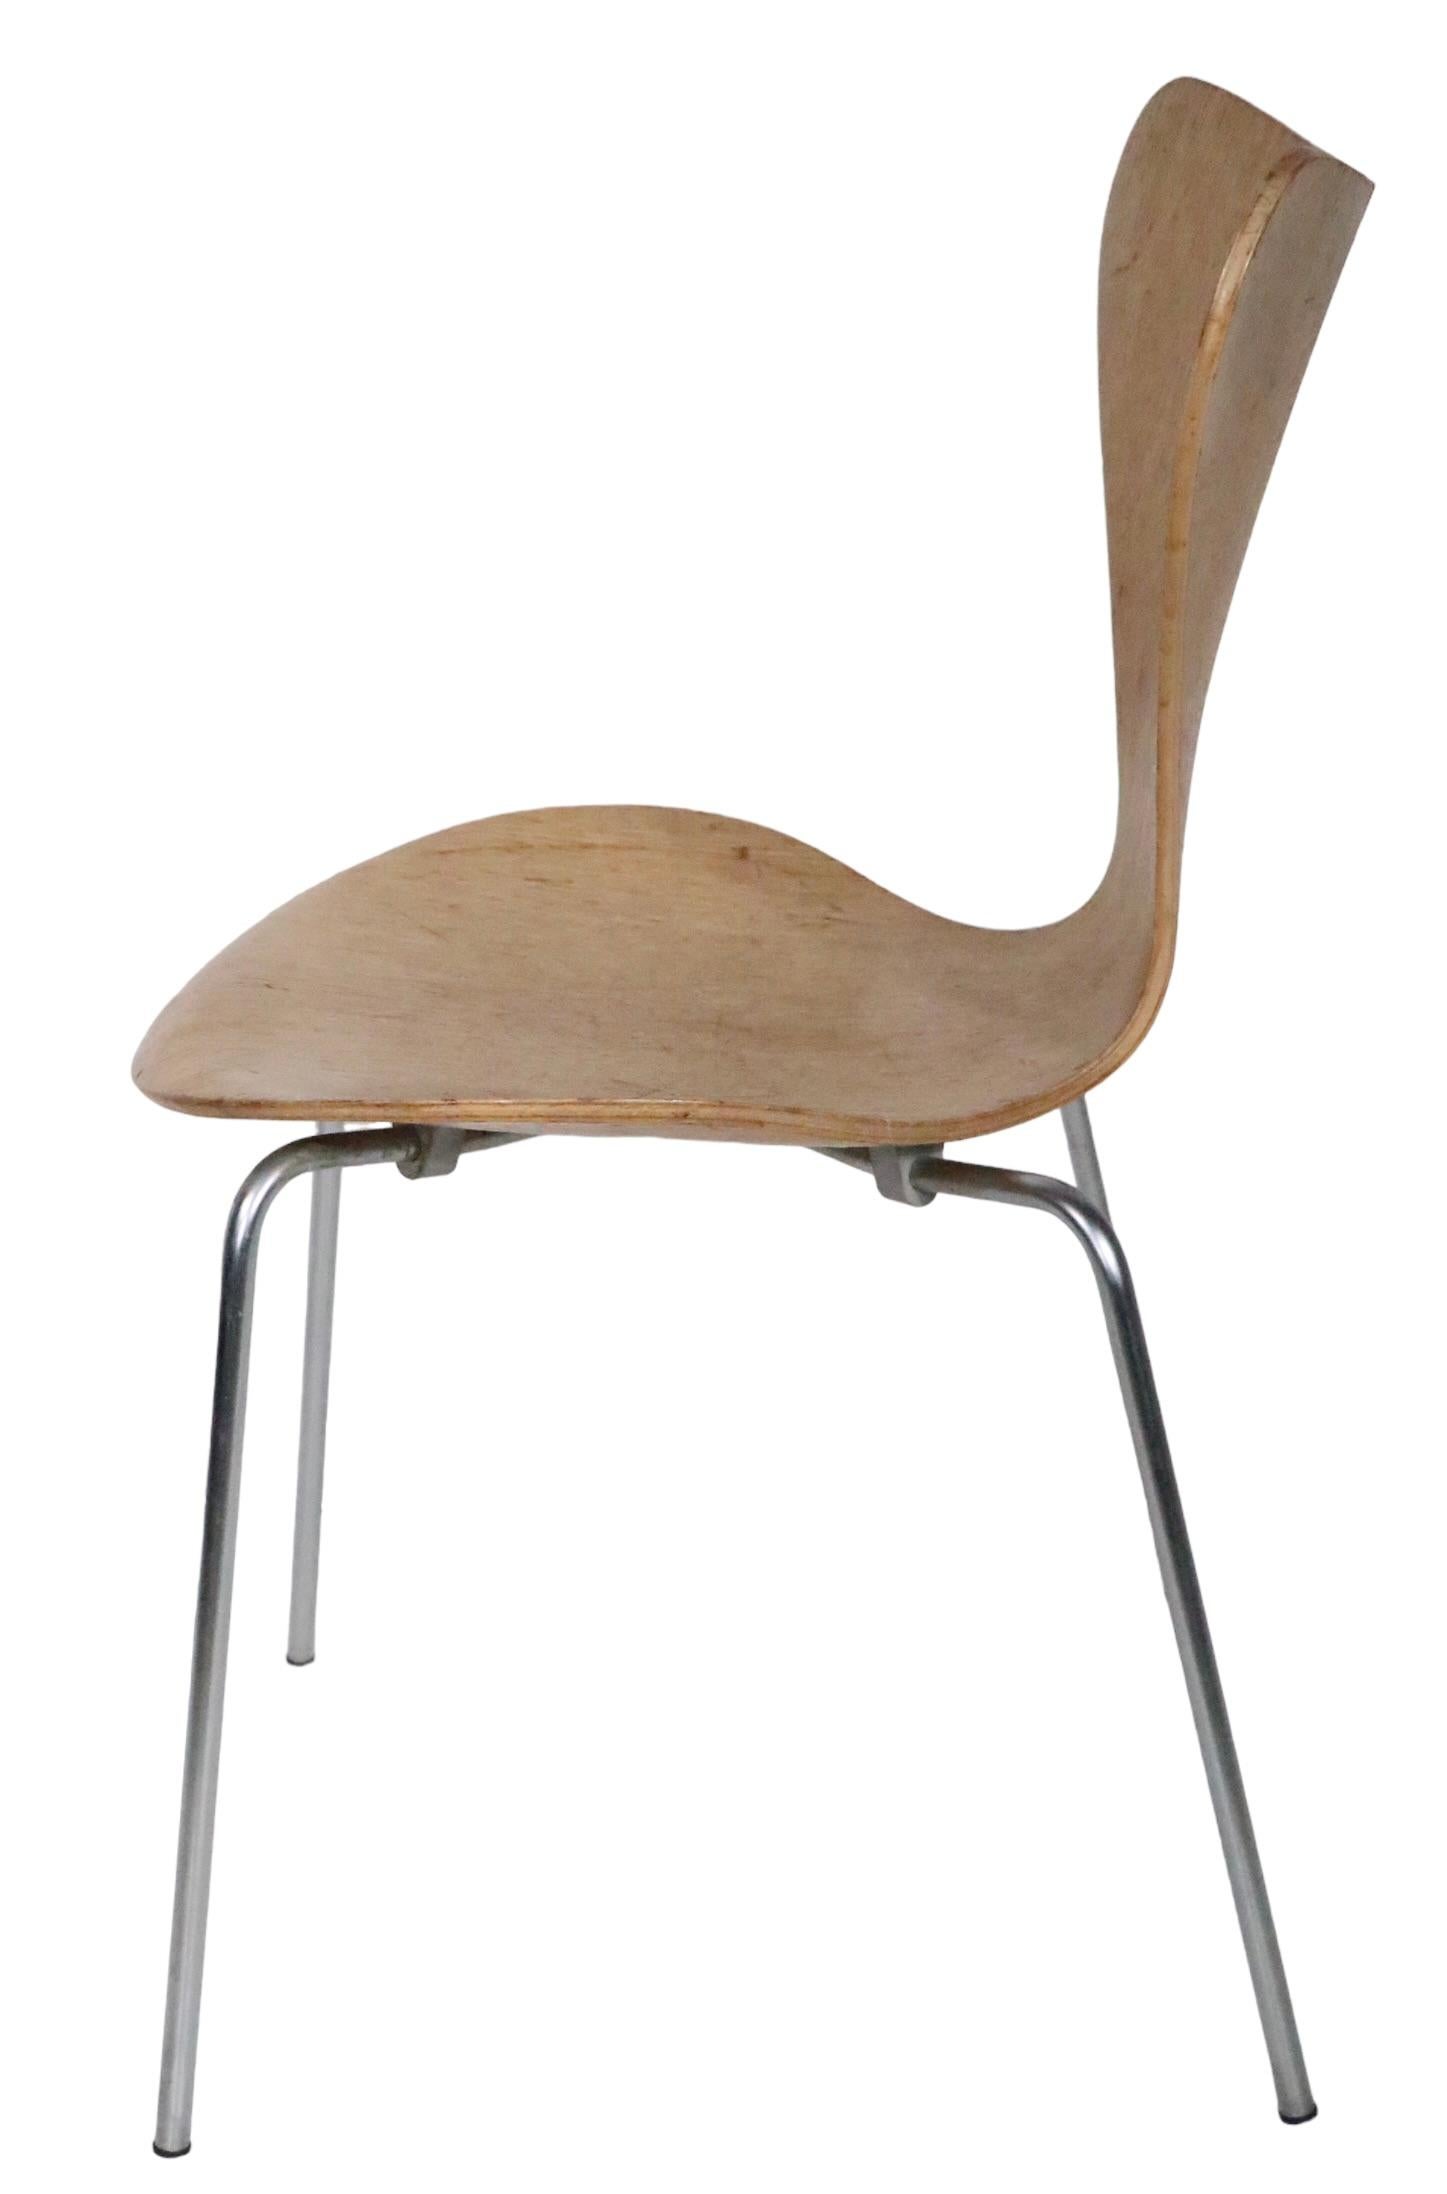 Arne Jacobsen Fritz Hansen Series 7 Butterfly Chair in Oak Veneer, circa 1960s For Sale 1